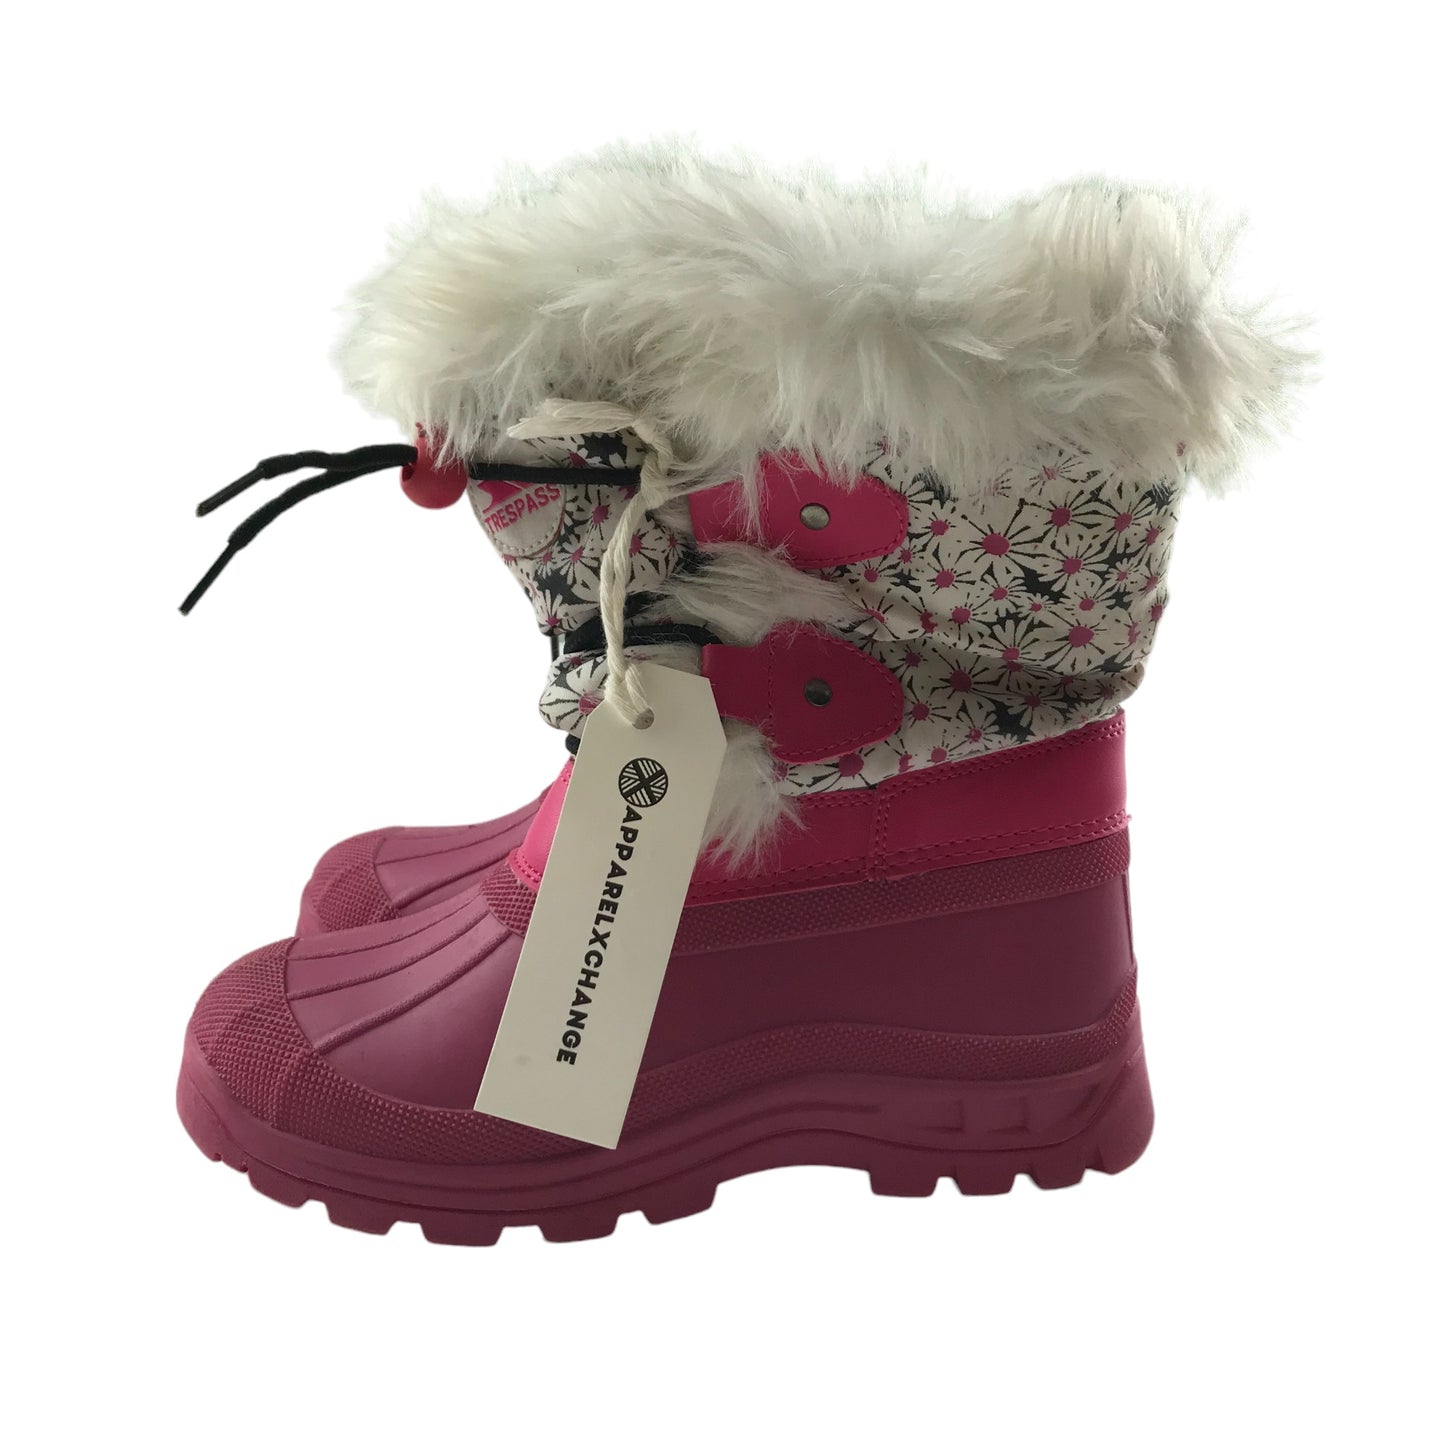 Trespass Snow Boots Shoe Size 2 Pink Floral Faux Fur Waterproof